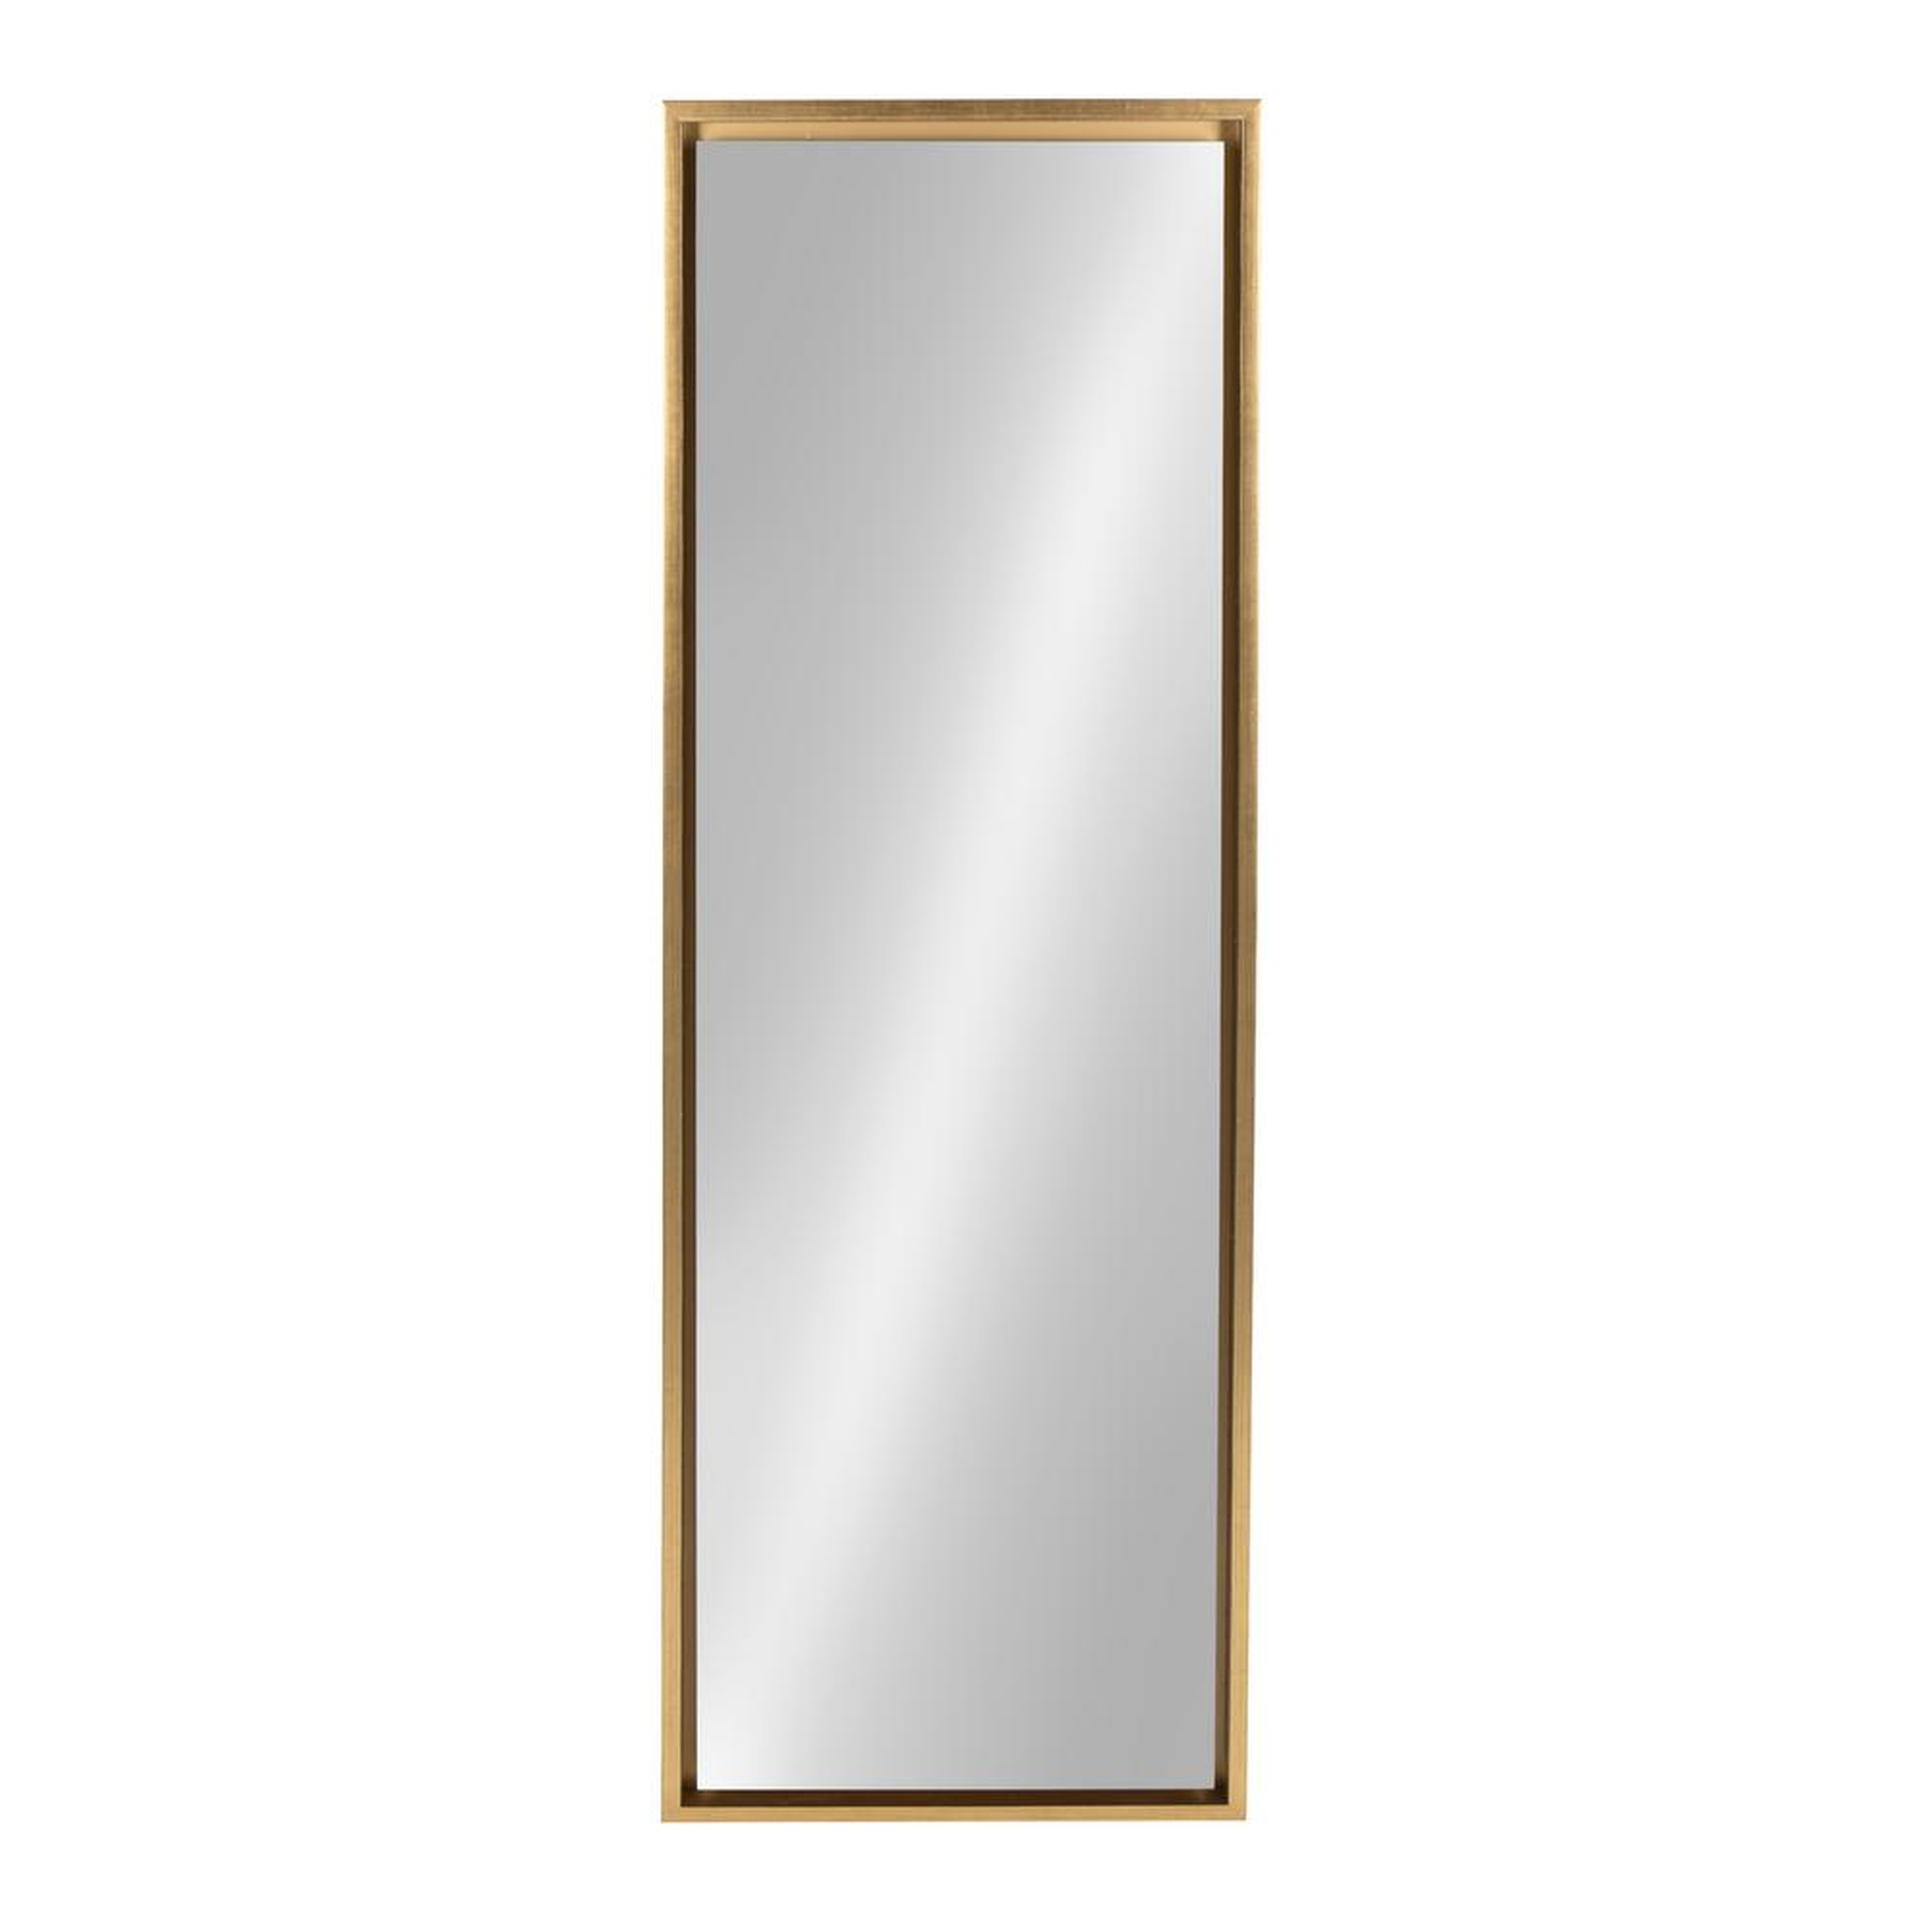 Evans Rectangle Gold Mirror - Home Depot